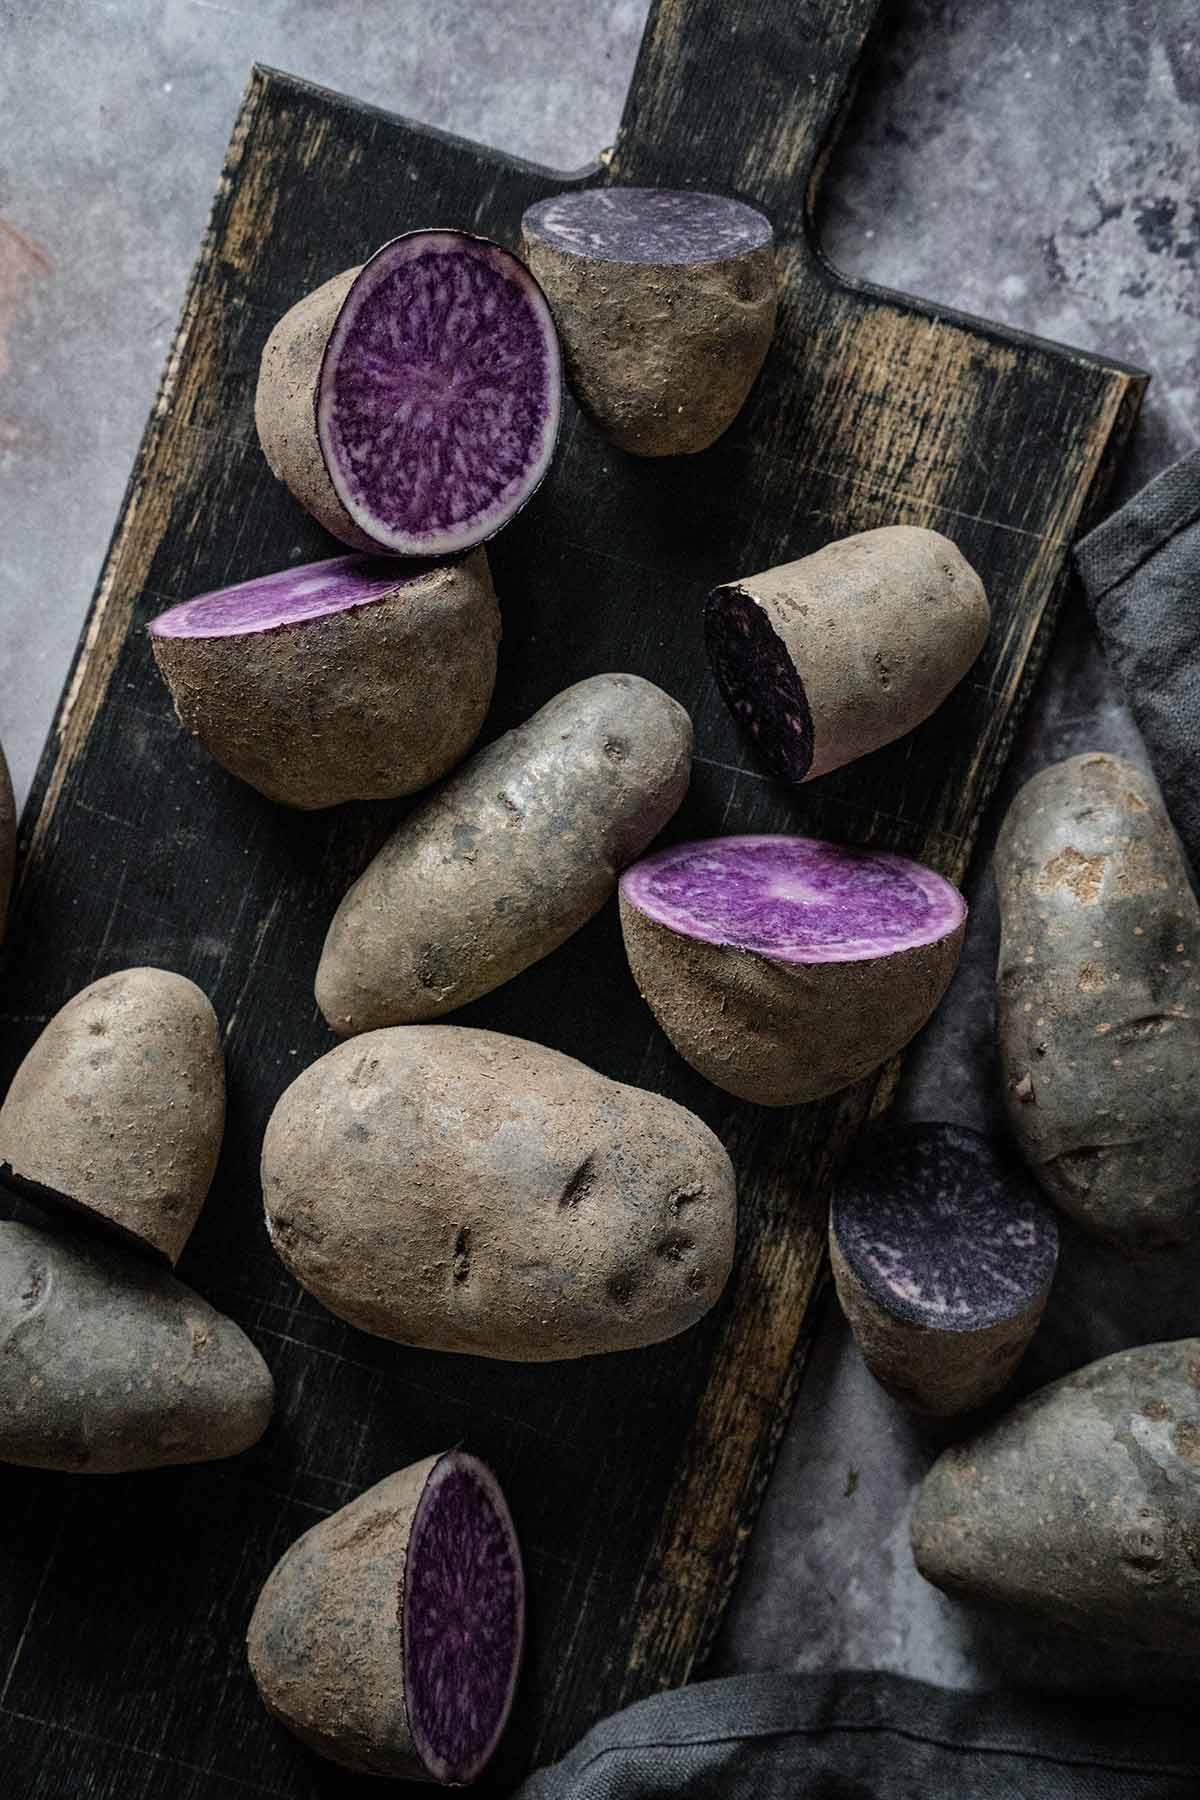 Raw purple potatoes